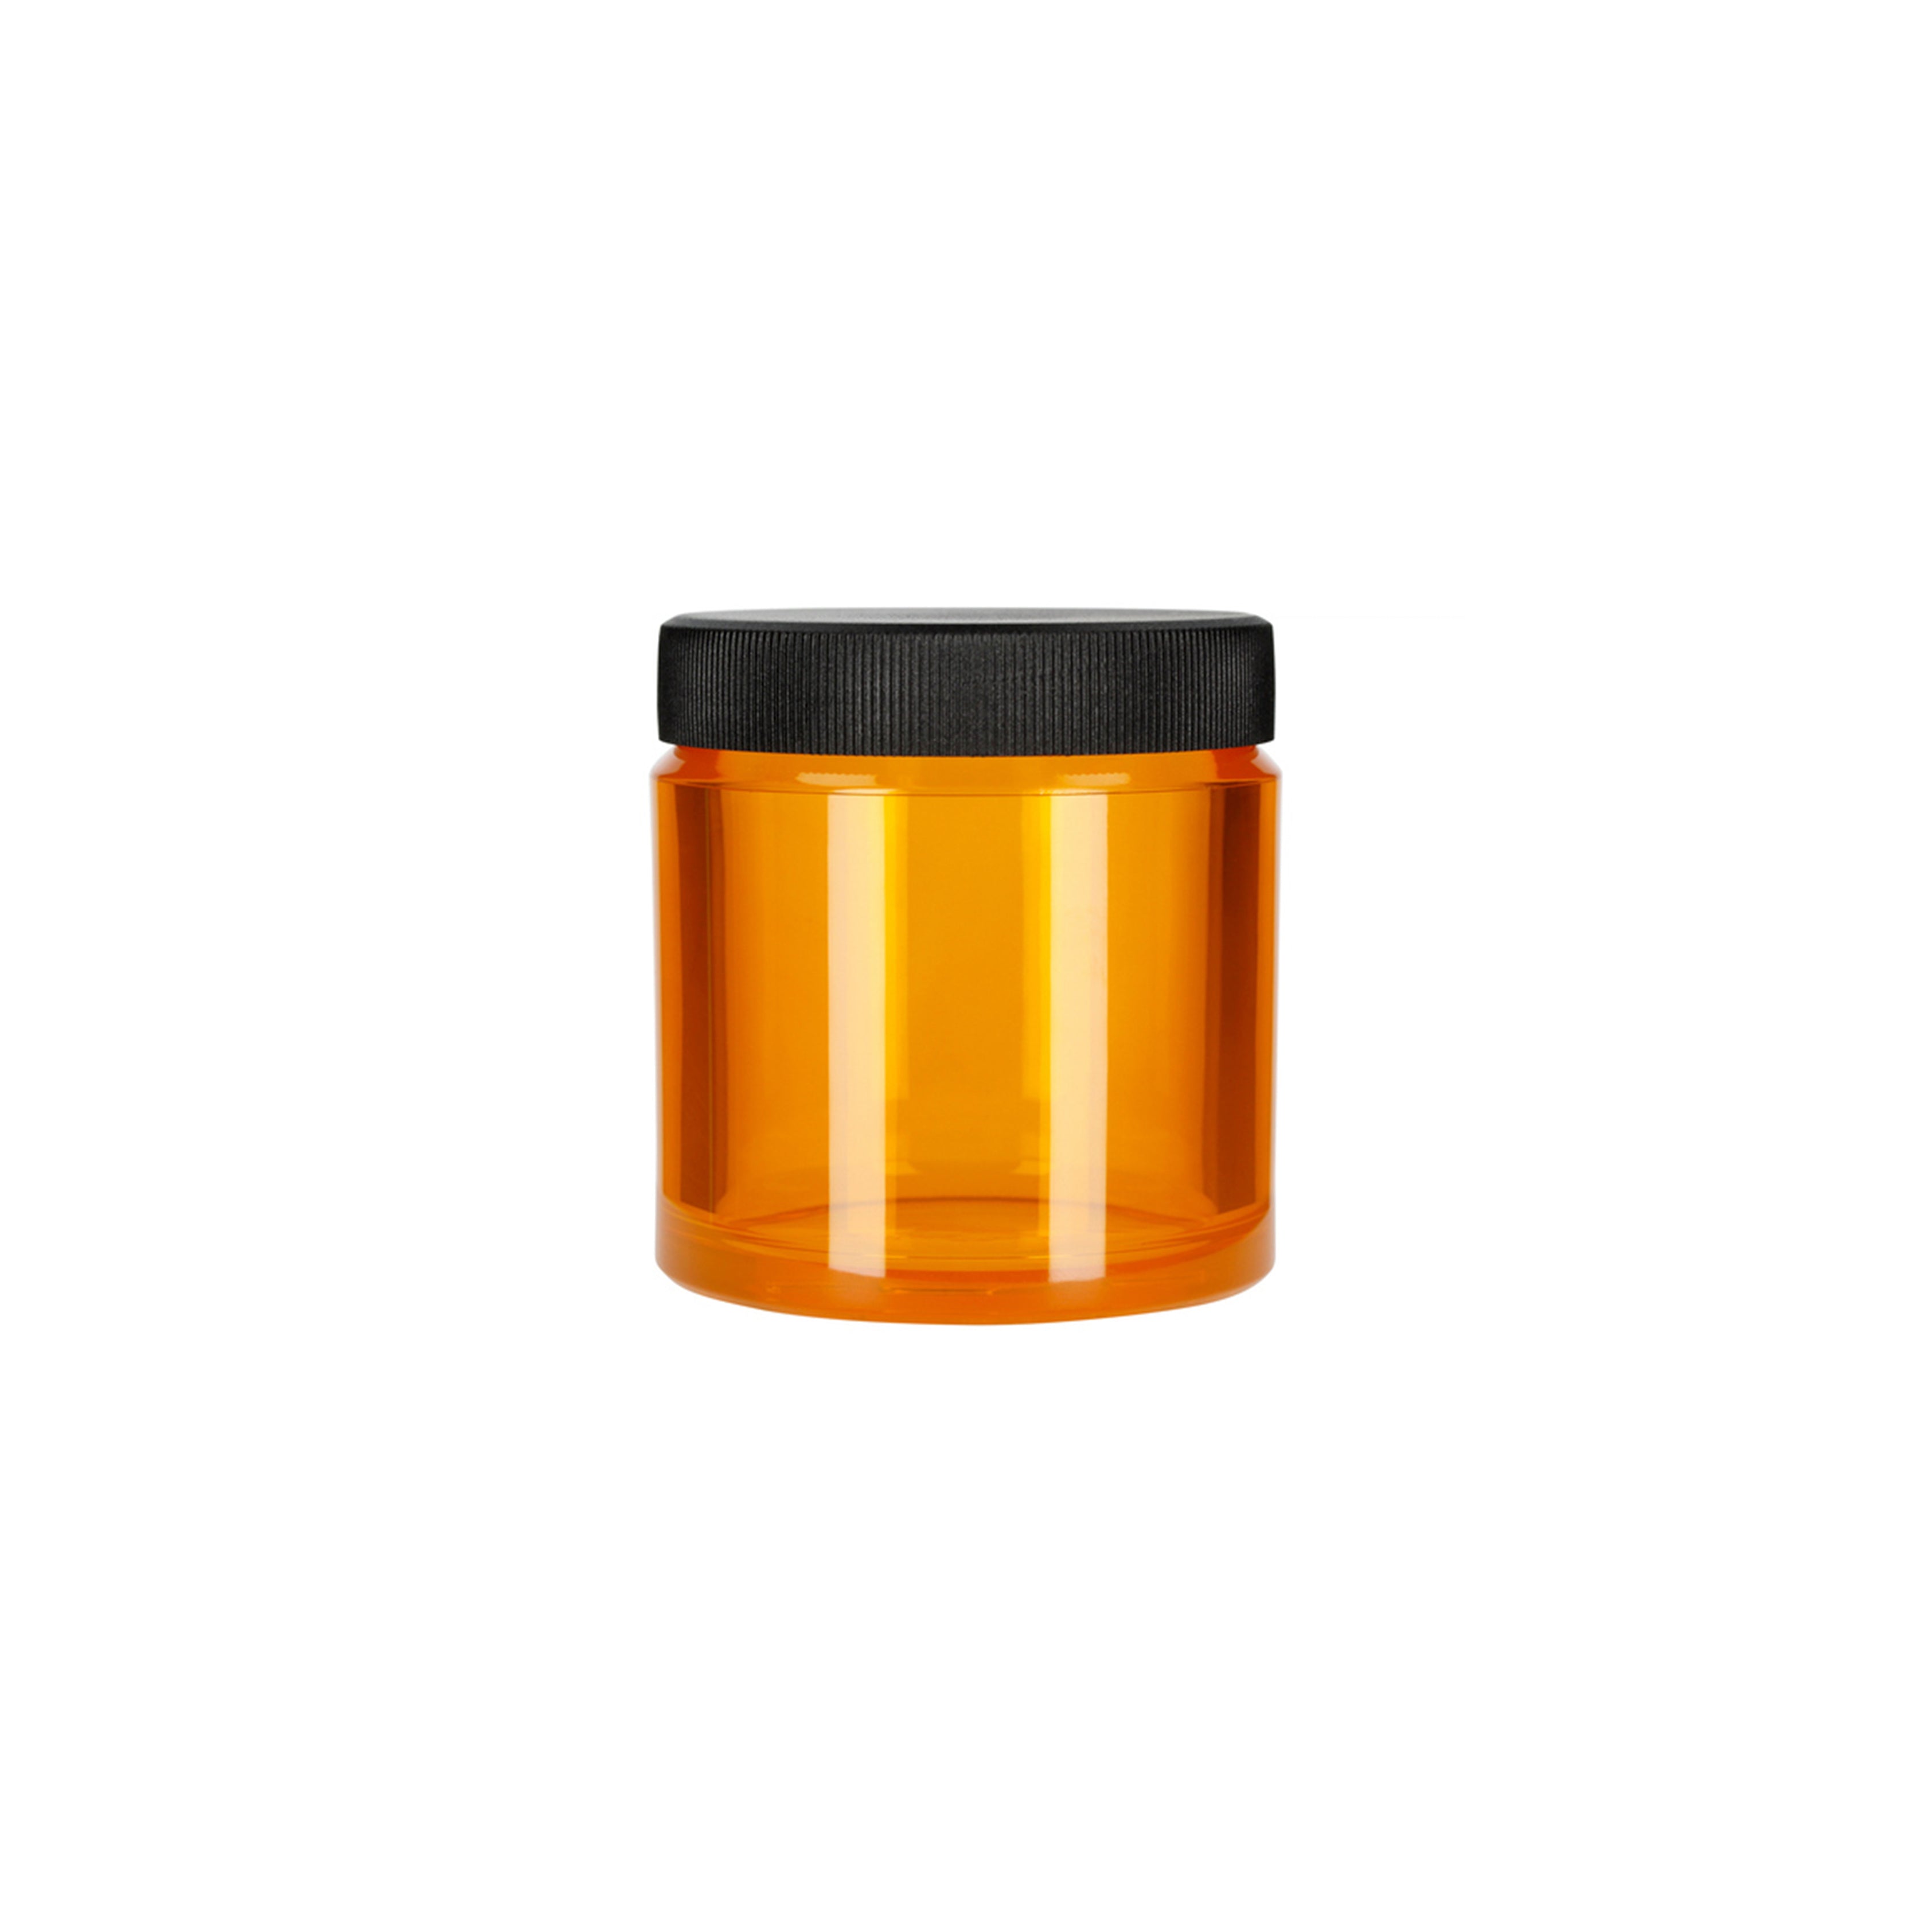 Comandante Polymer Bean Jar & Lid - Orange